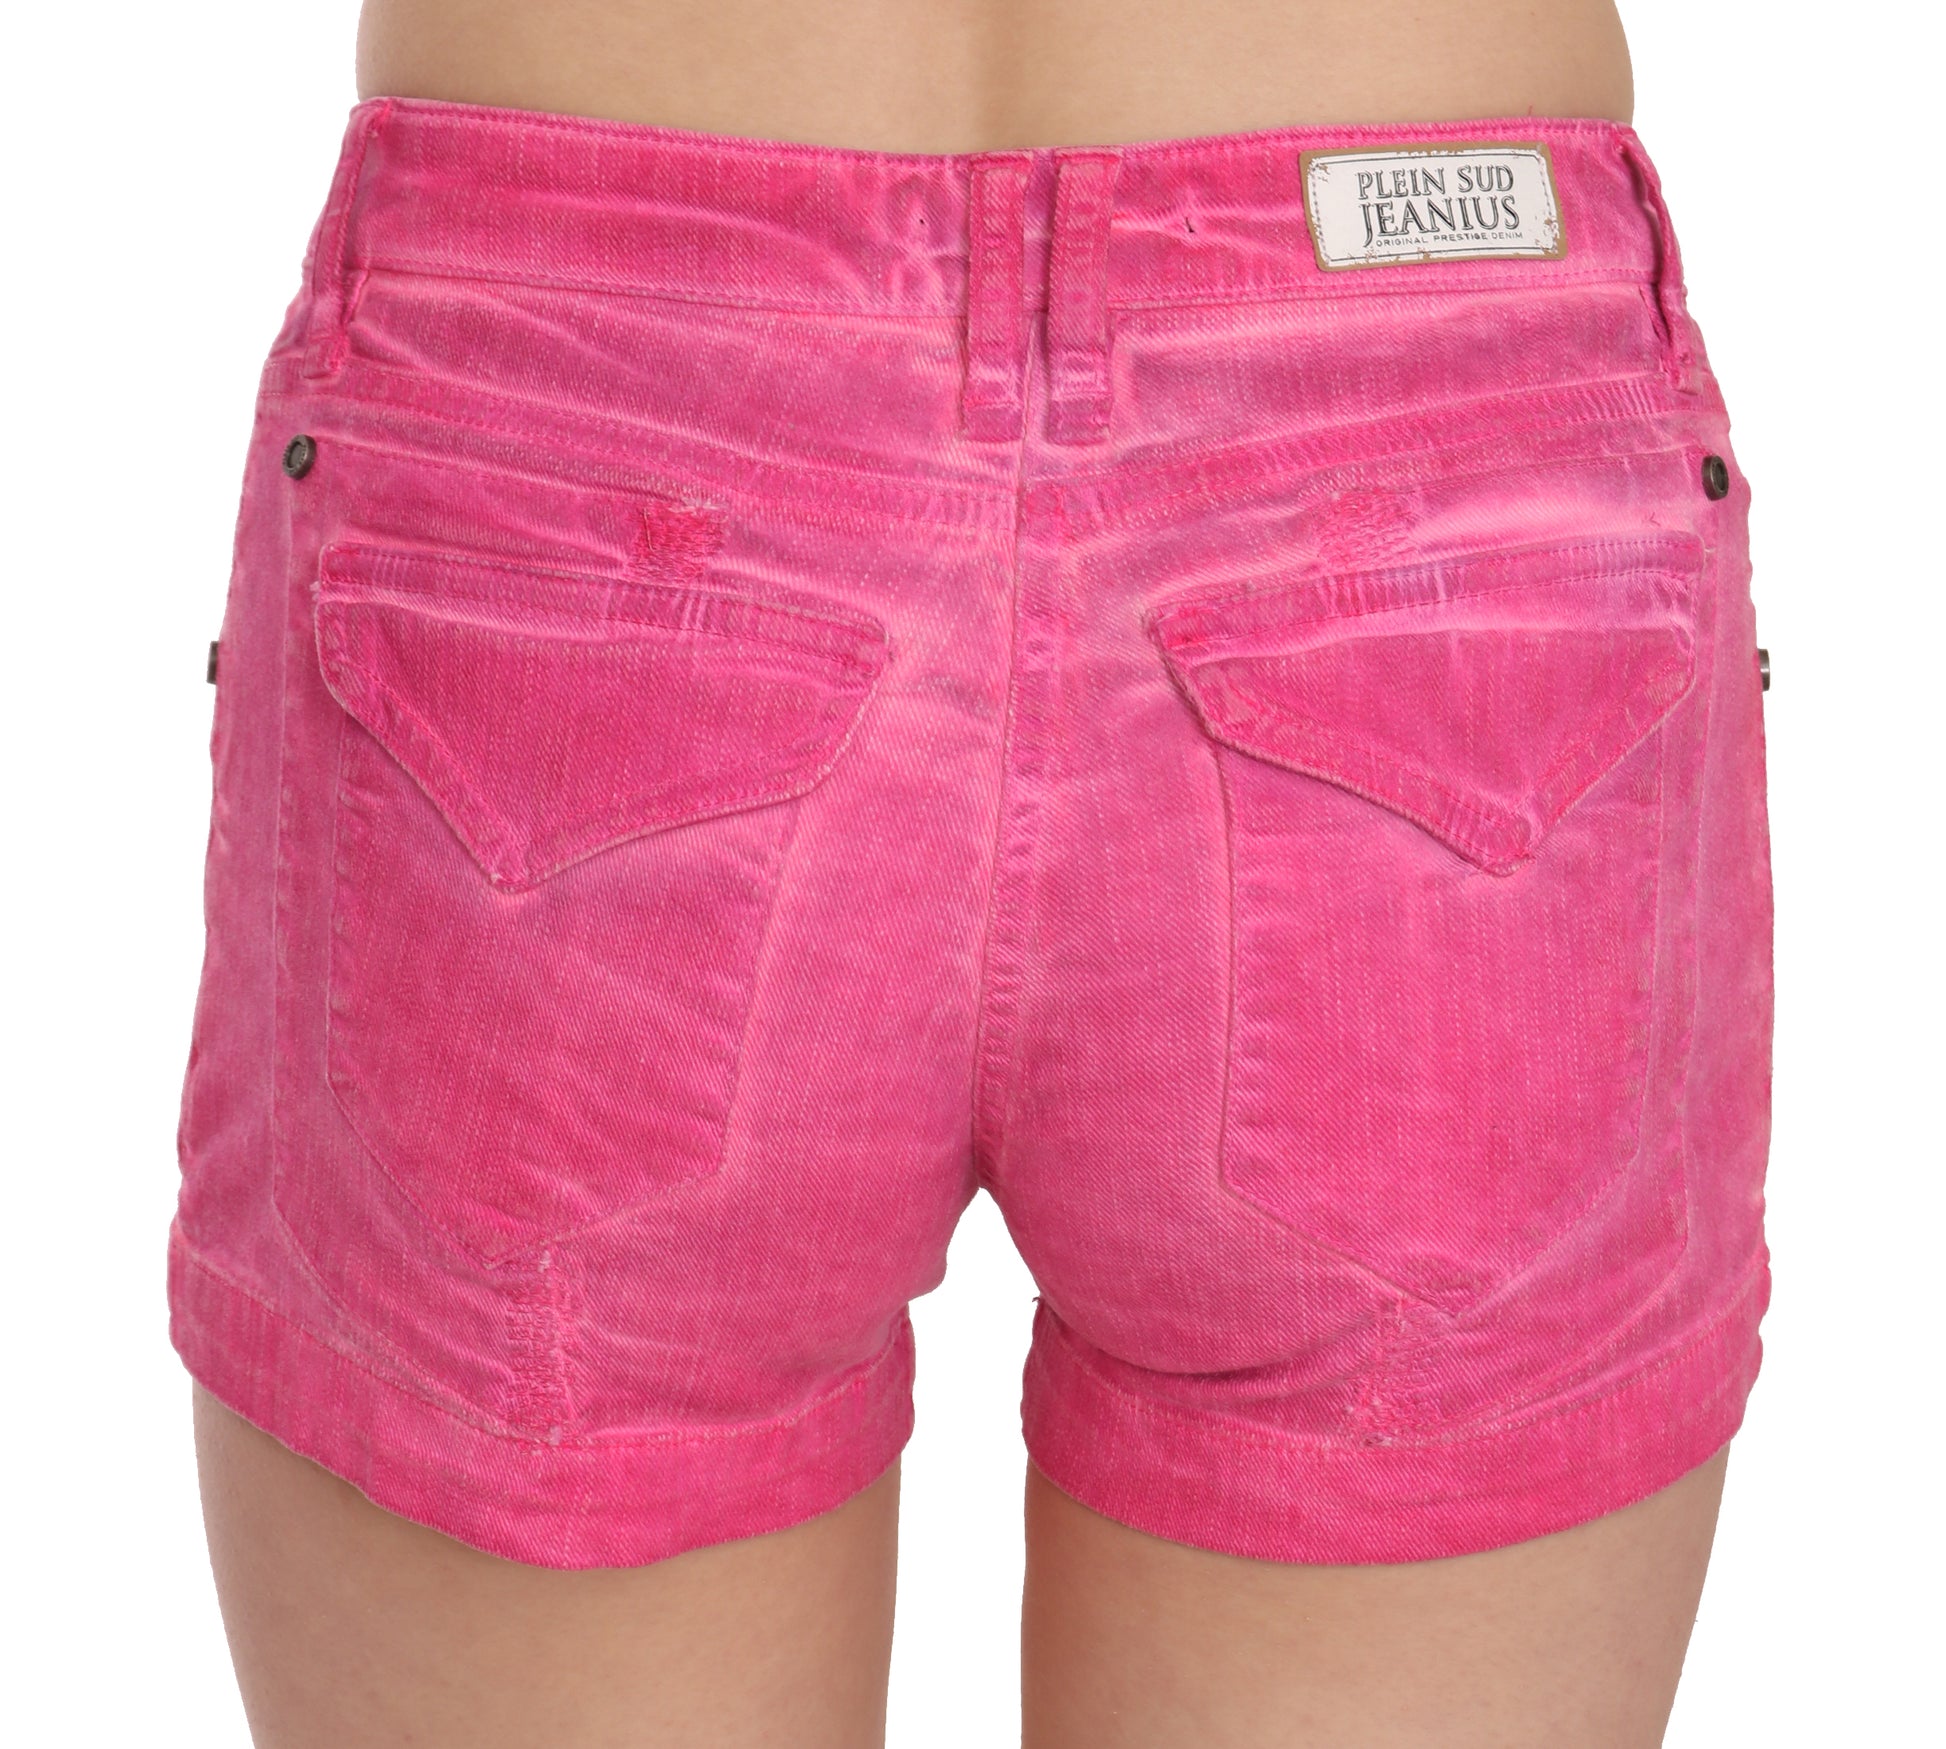 Chic Pink Mid Waist Mini Shorts